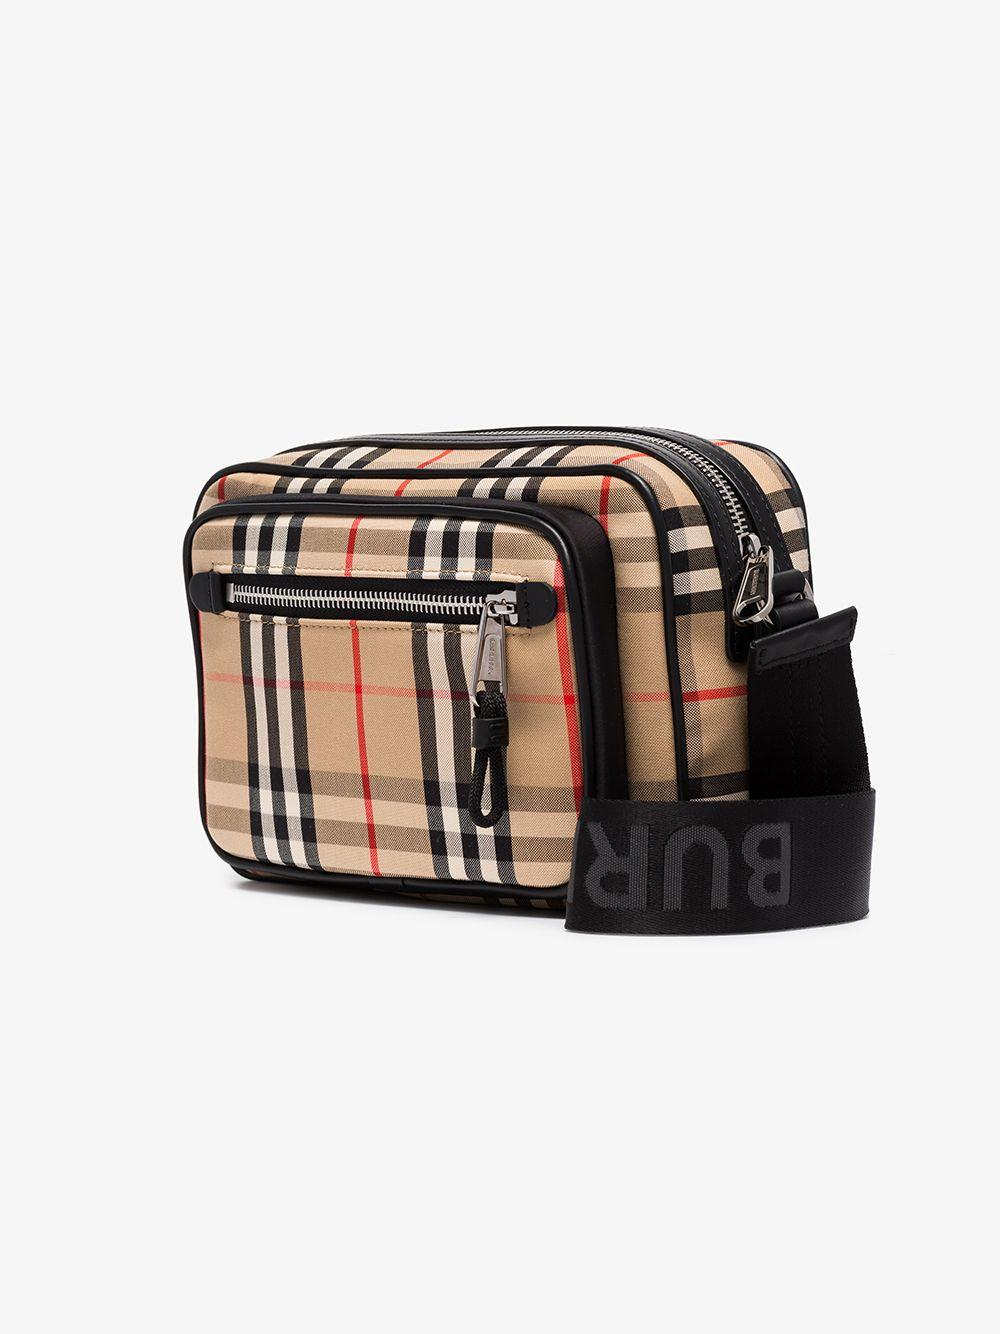 Burberry Beige Vintage Check Cross Body Bag in Brown for Men - Lyst